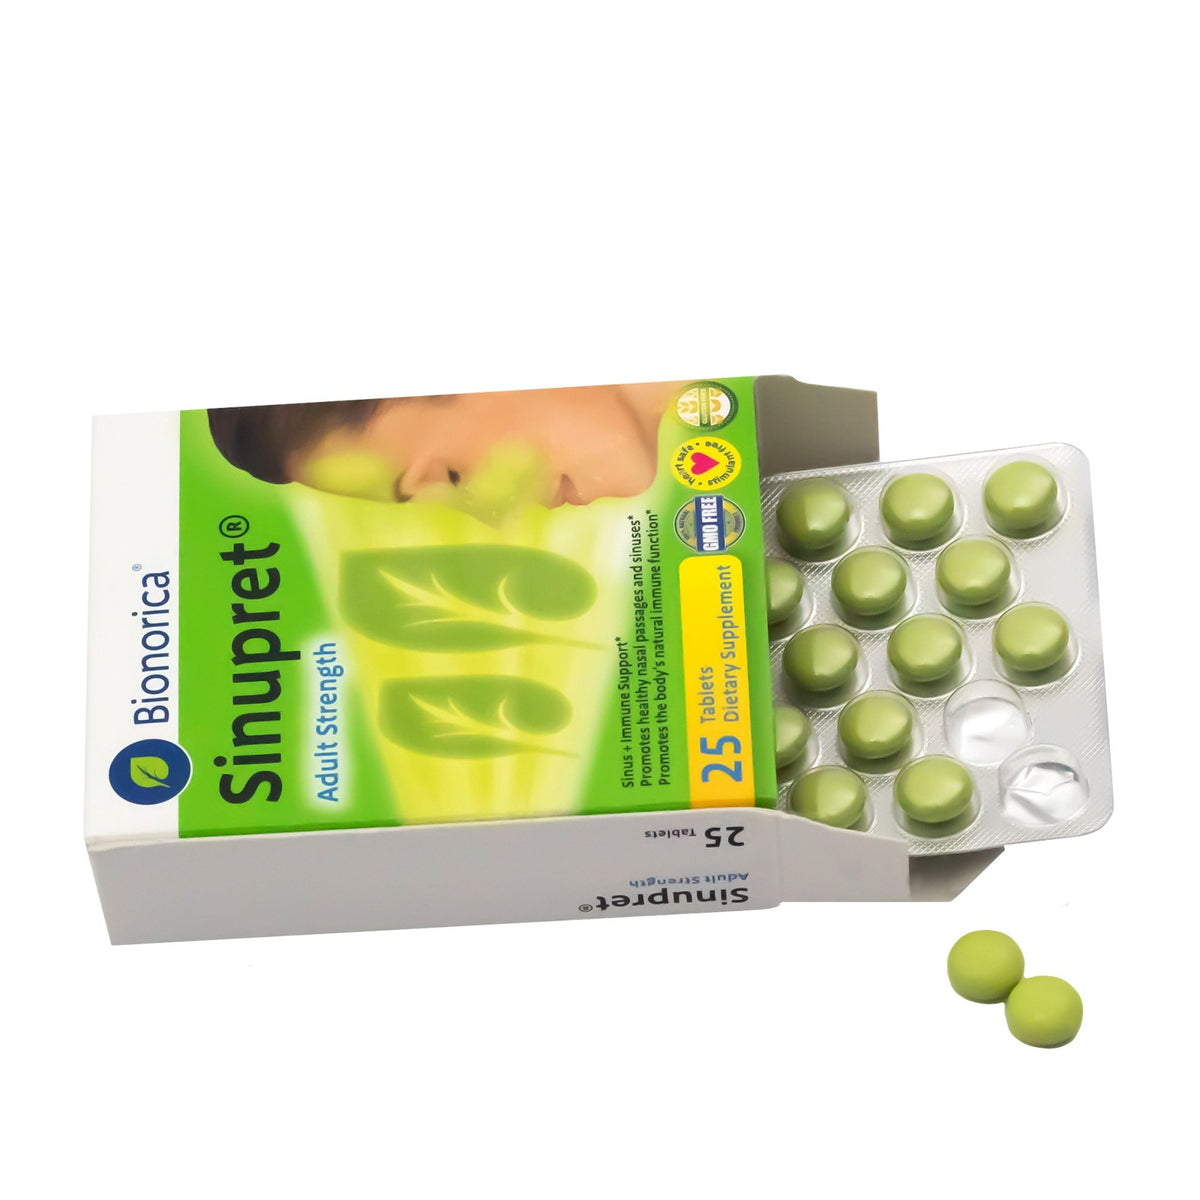 Bionorica Sinupret Adult Strength 25 Tablet